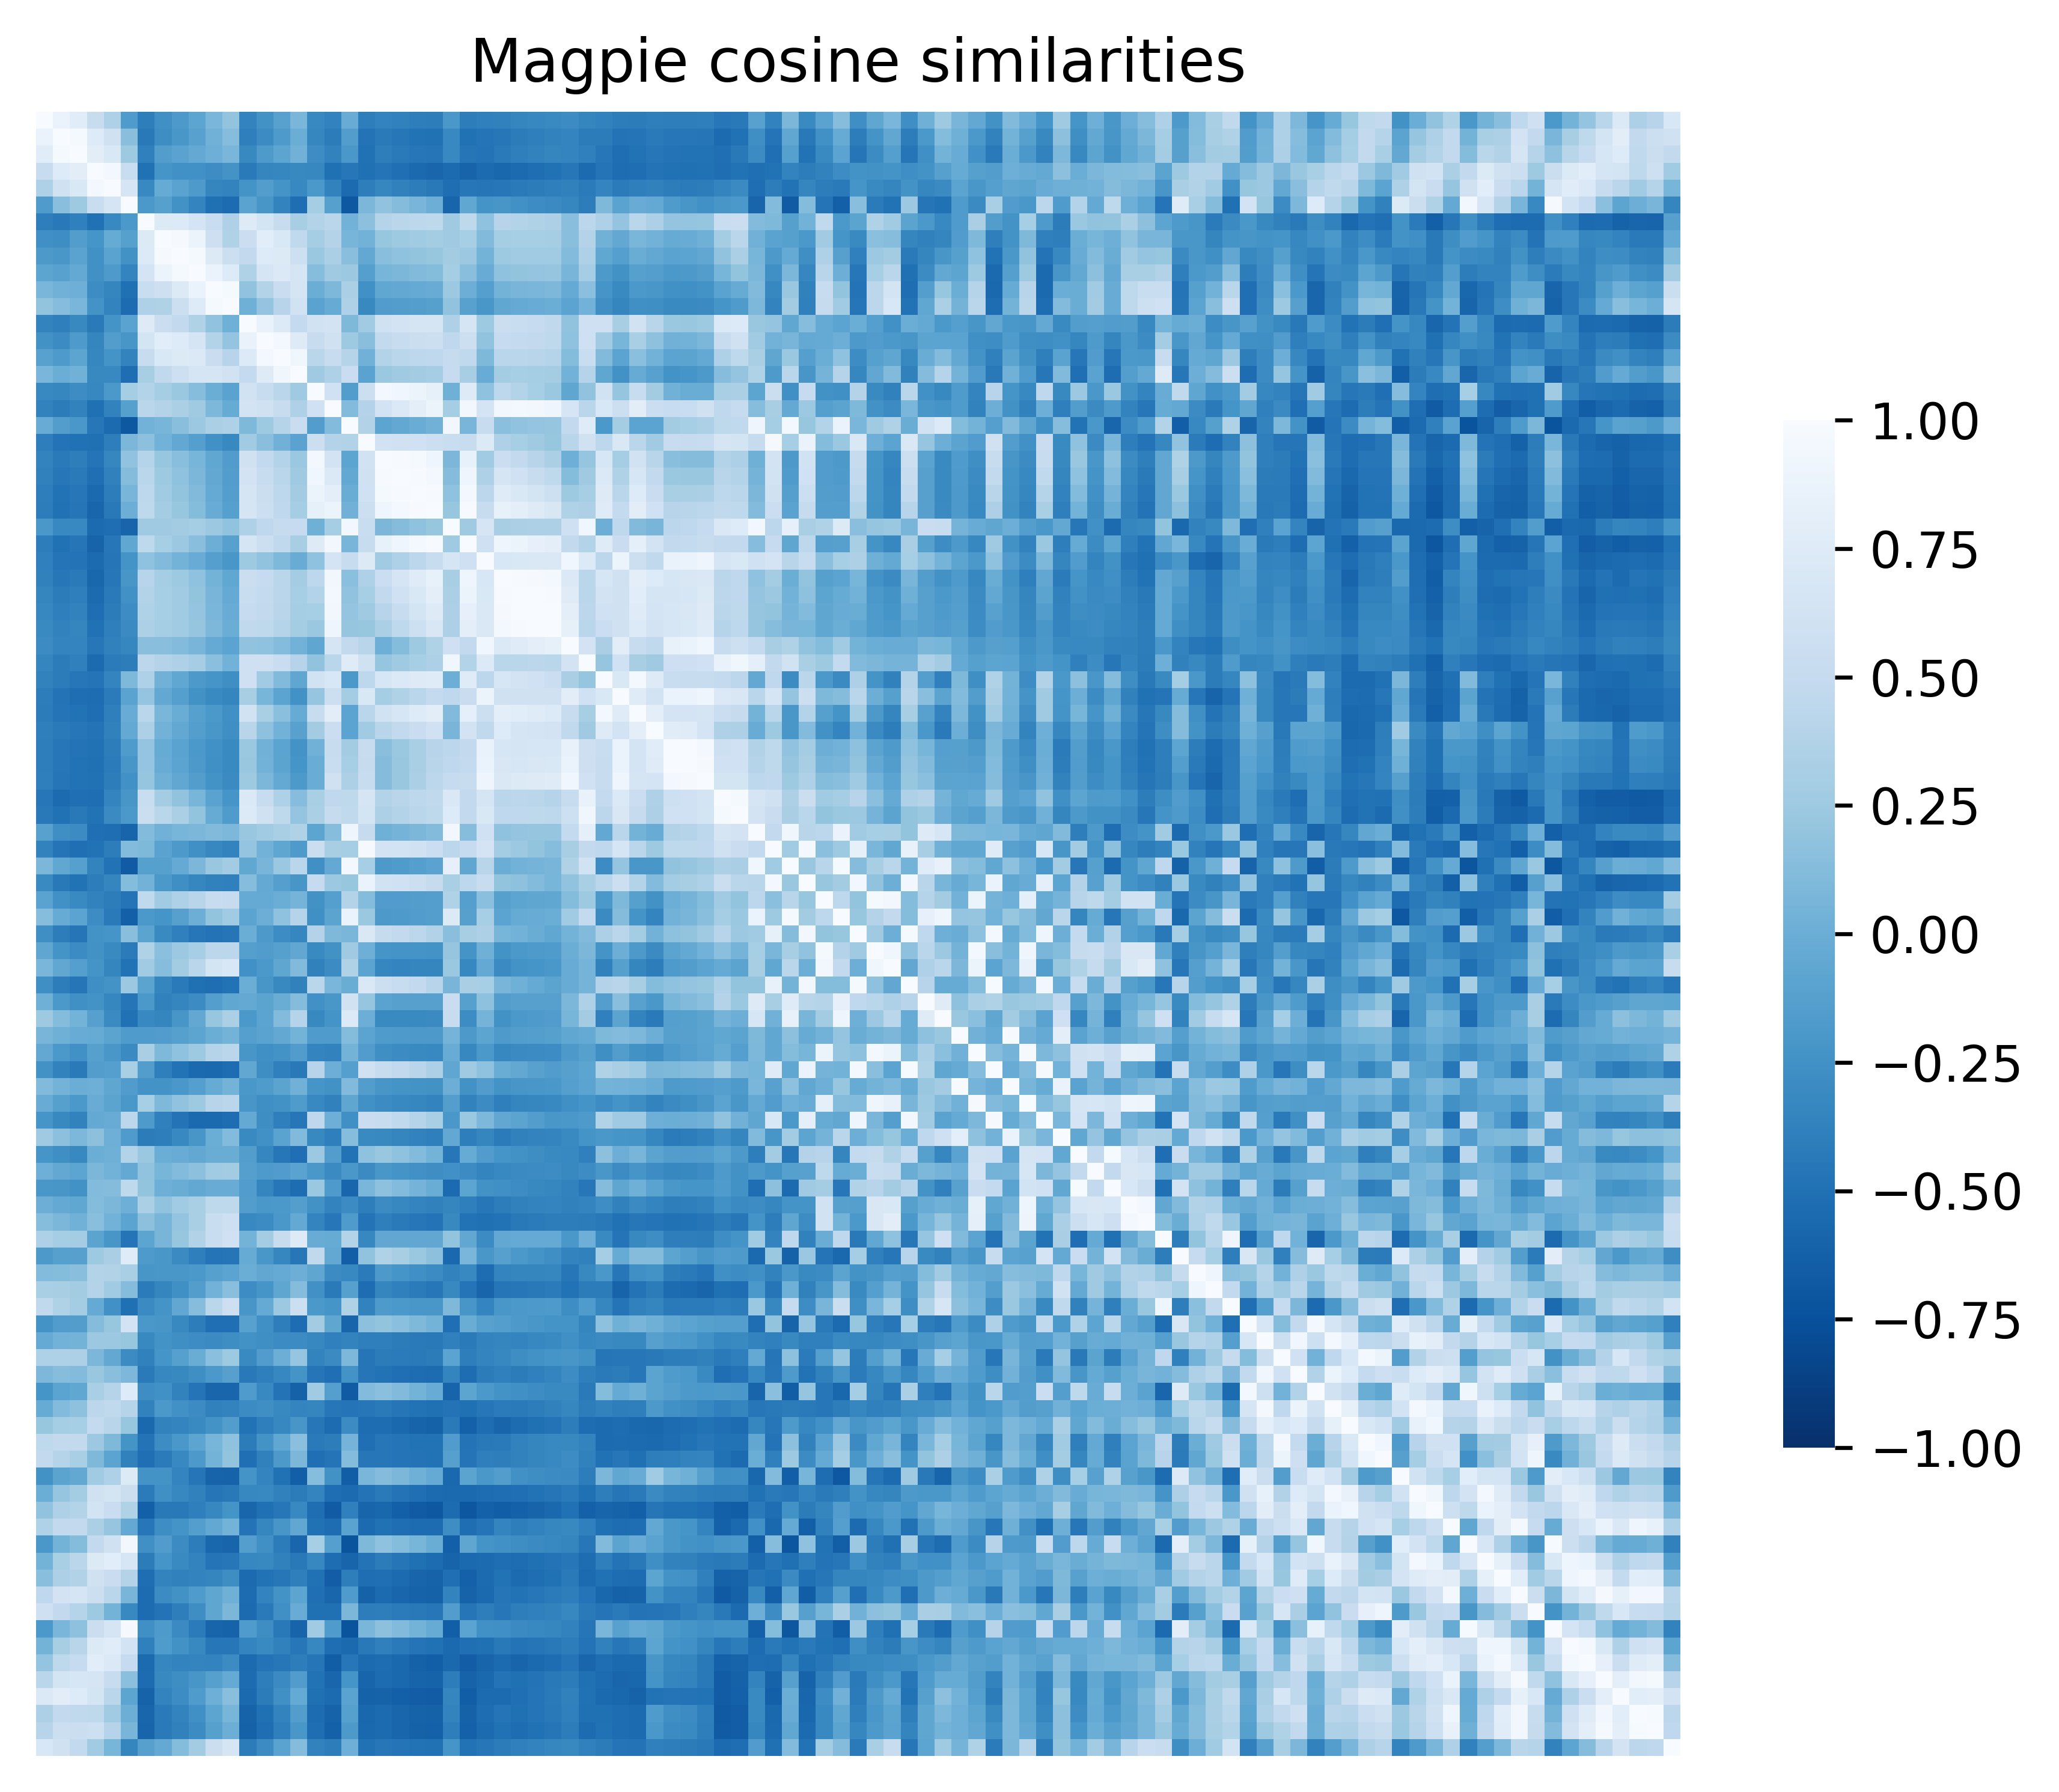 Cosine similarity heatmap of the magpie representation